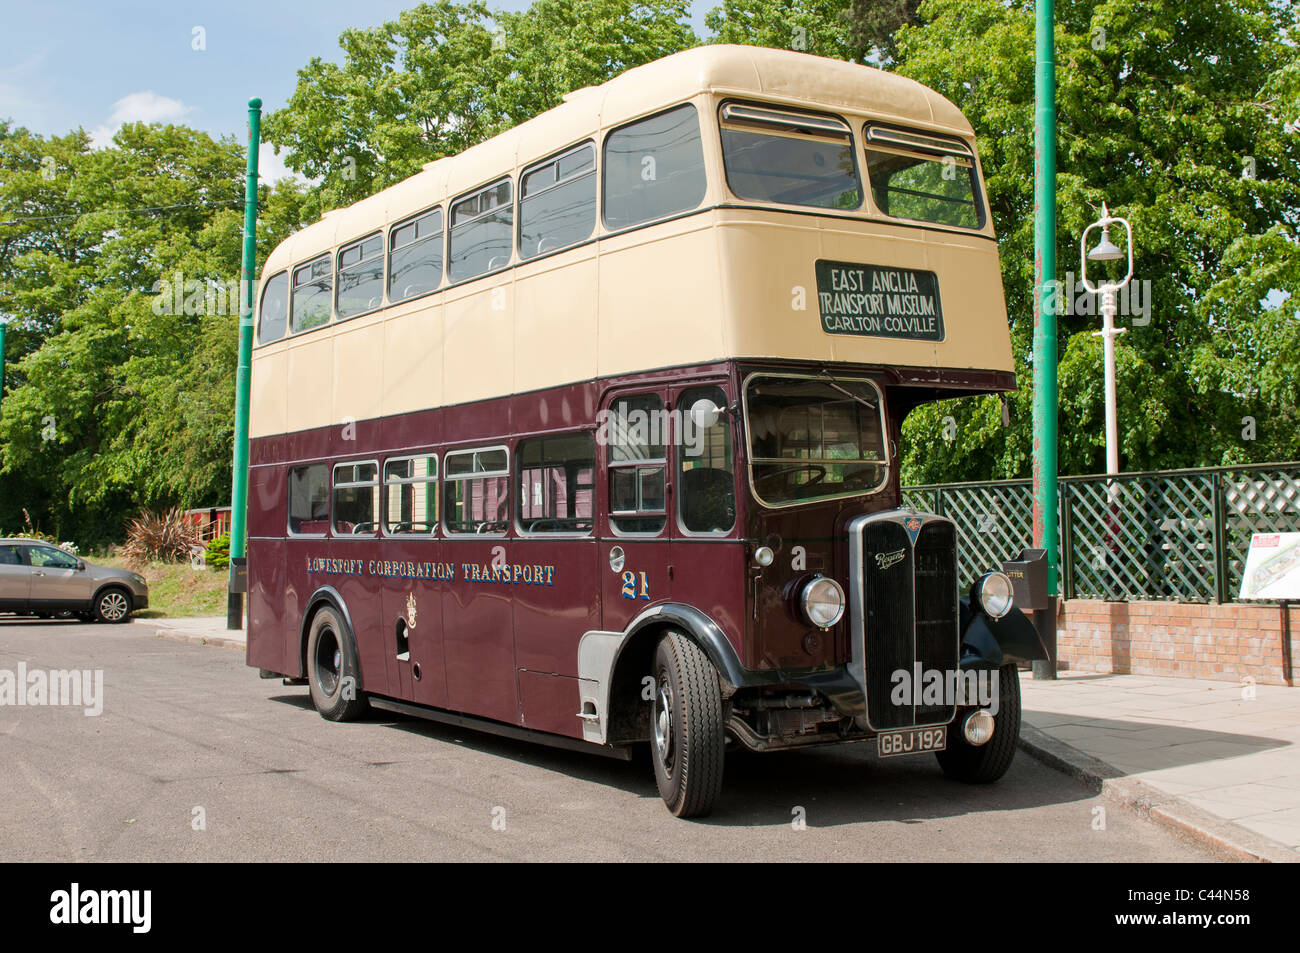 Vintage Double Decker Bus at East Anglian Transport Museum UK vintage transport Stock Photo